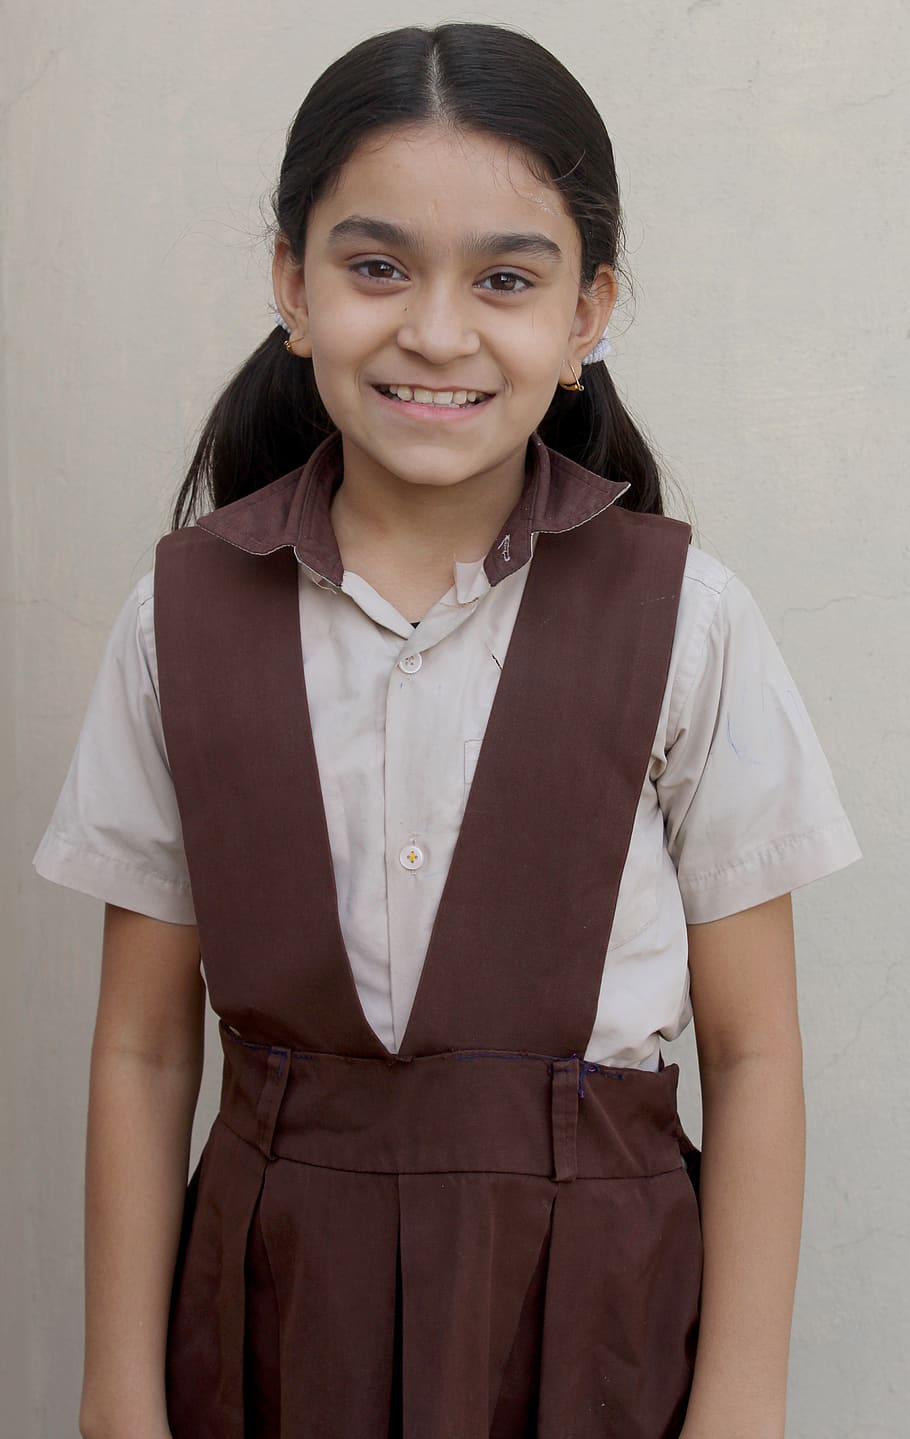 school, indian school, school dress, cute girl, girl, joy, indians, fun, smile, happy